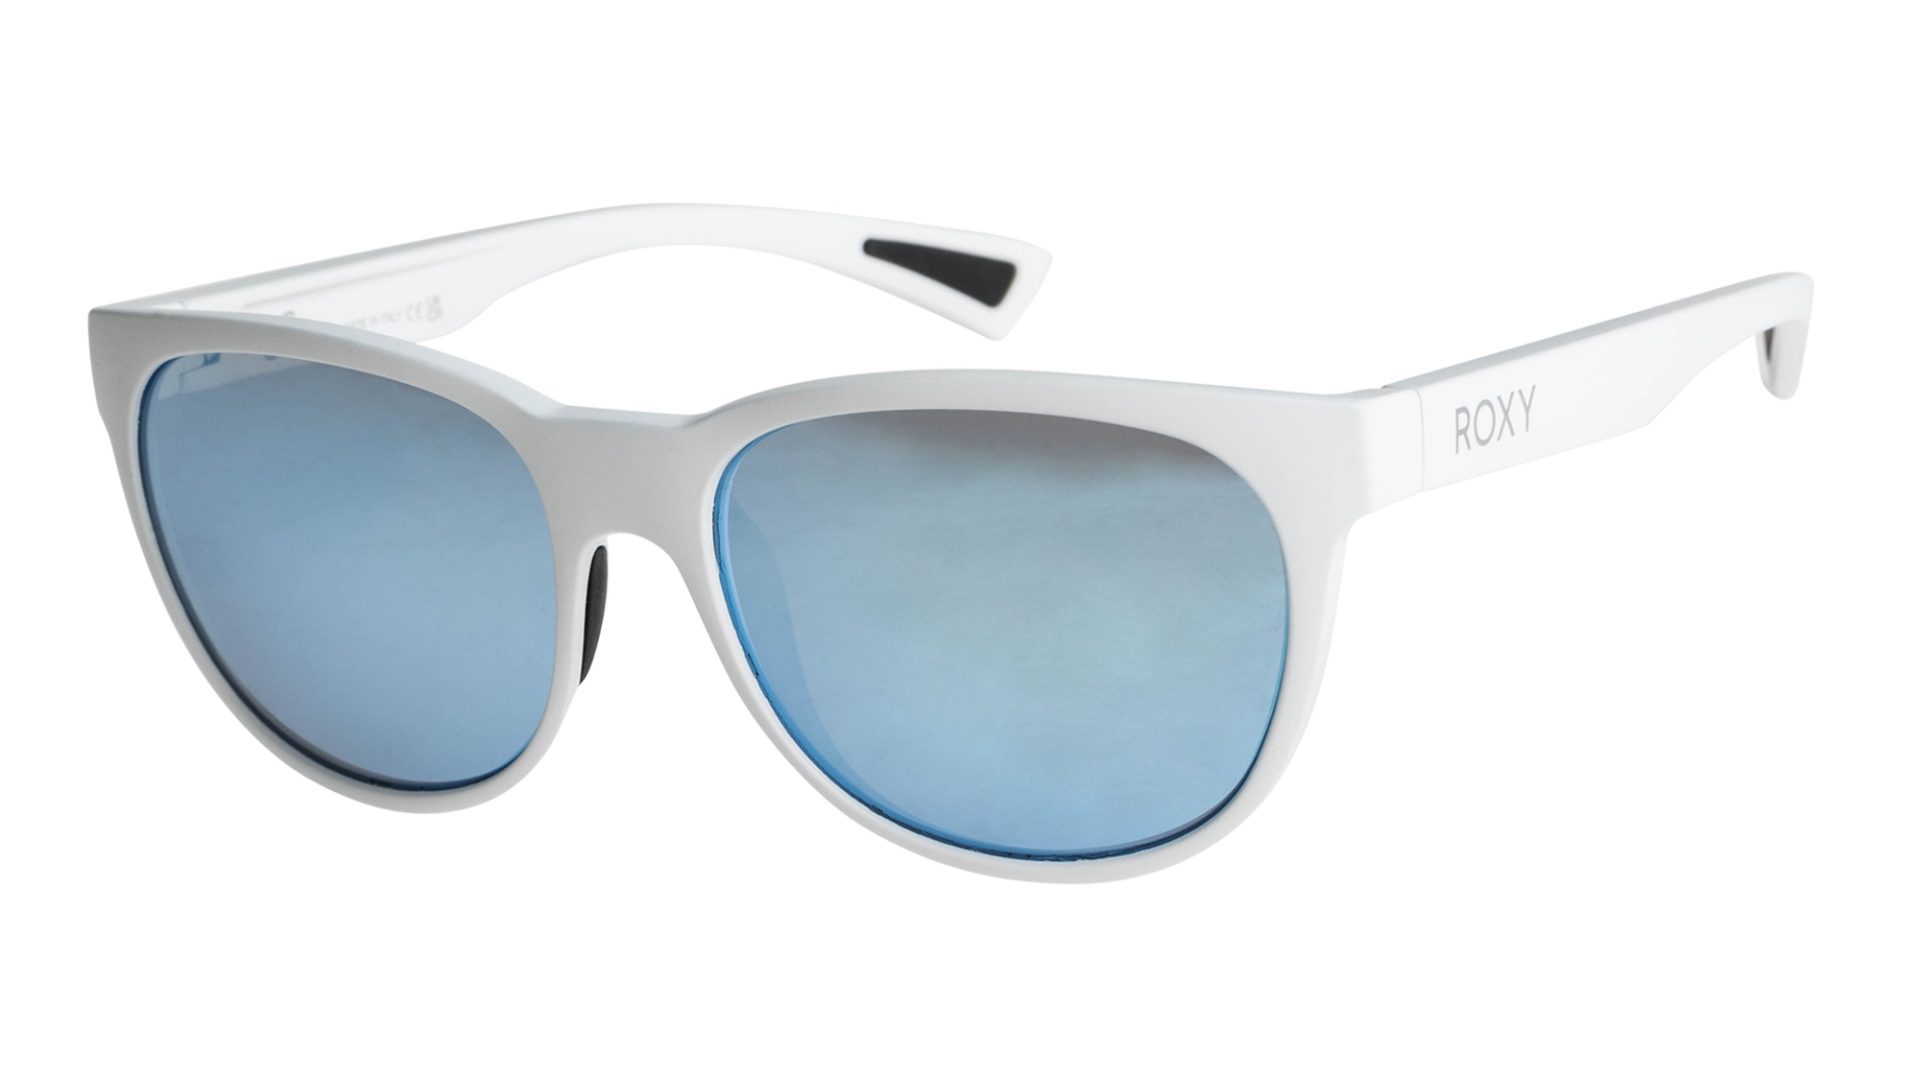 Roxy 2022 Sunglasses